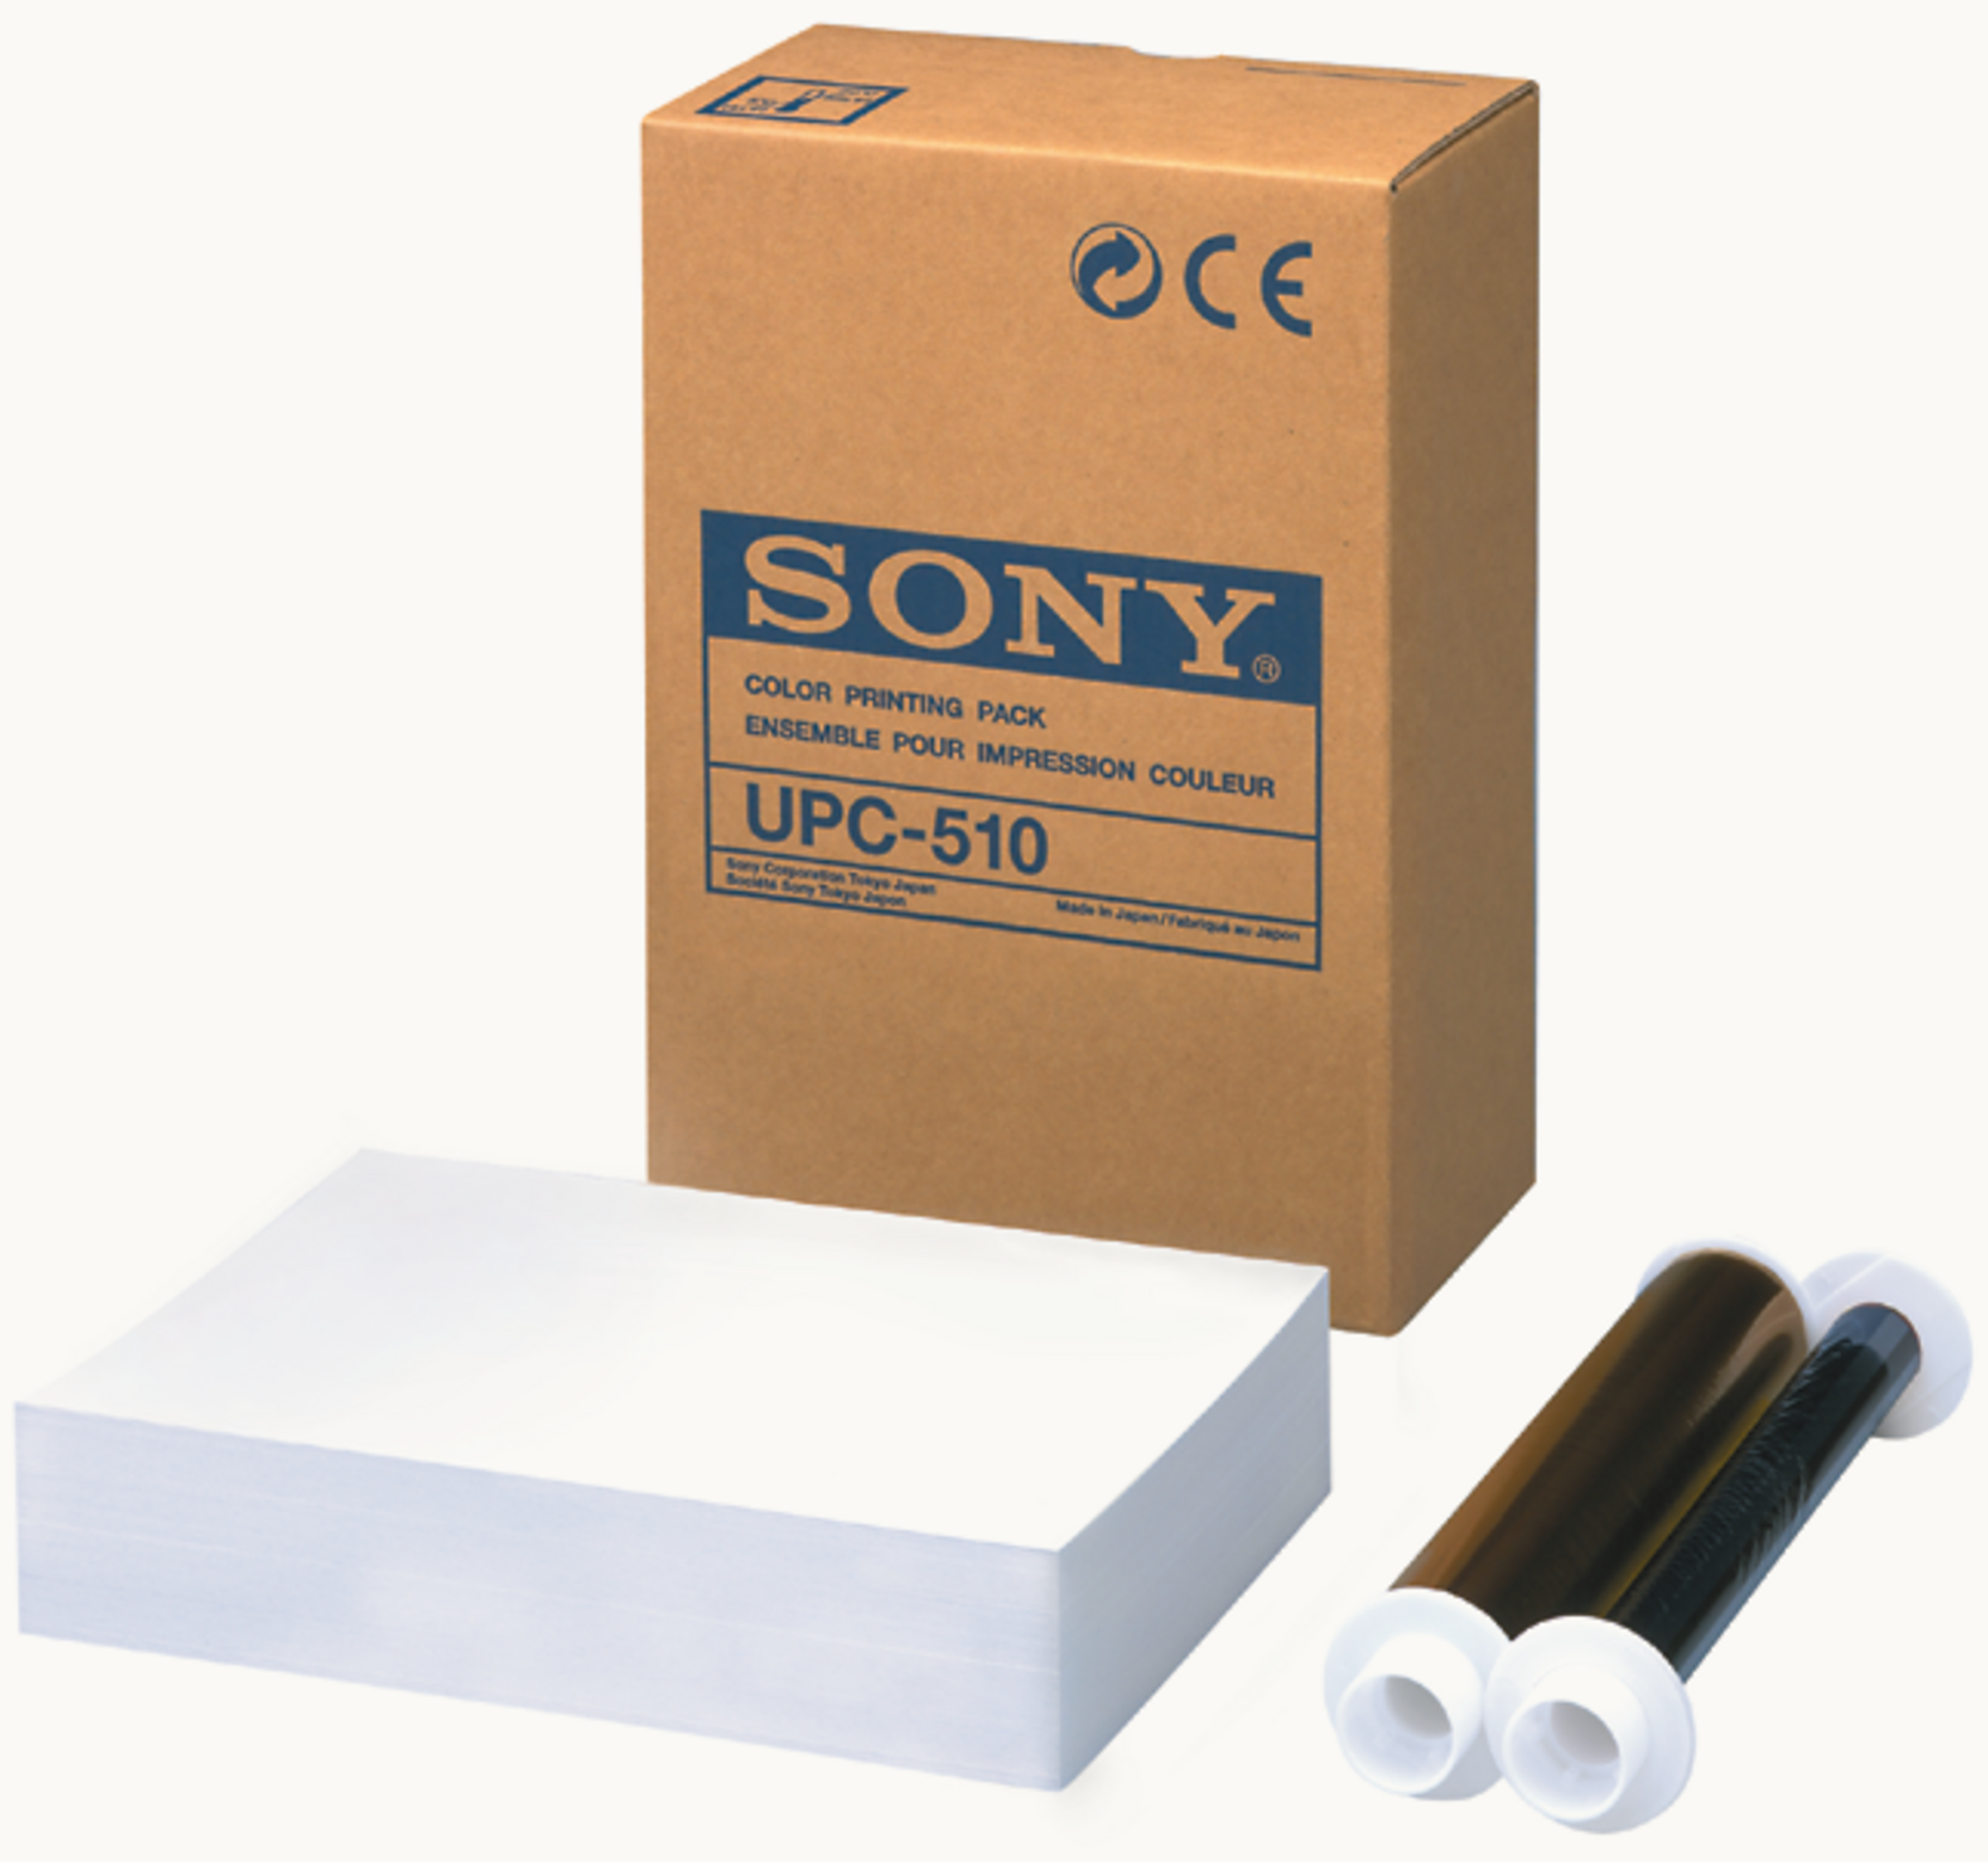 Sony Ultrasound Film SNY UPC-510 SONY CLR DIM